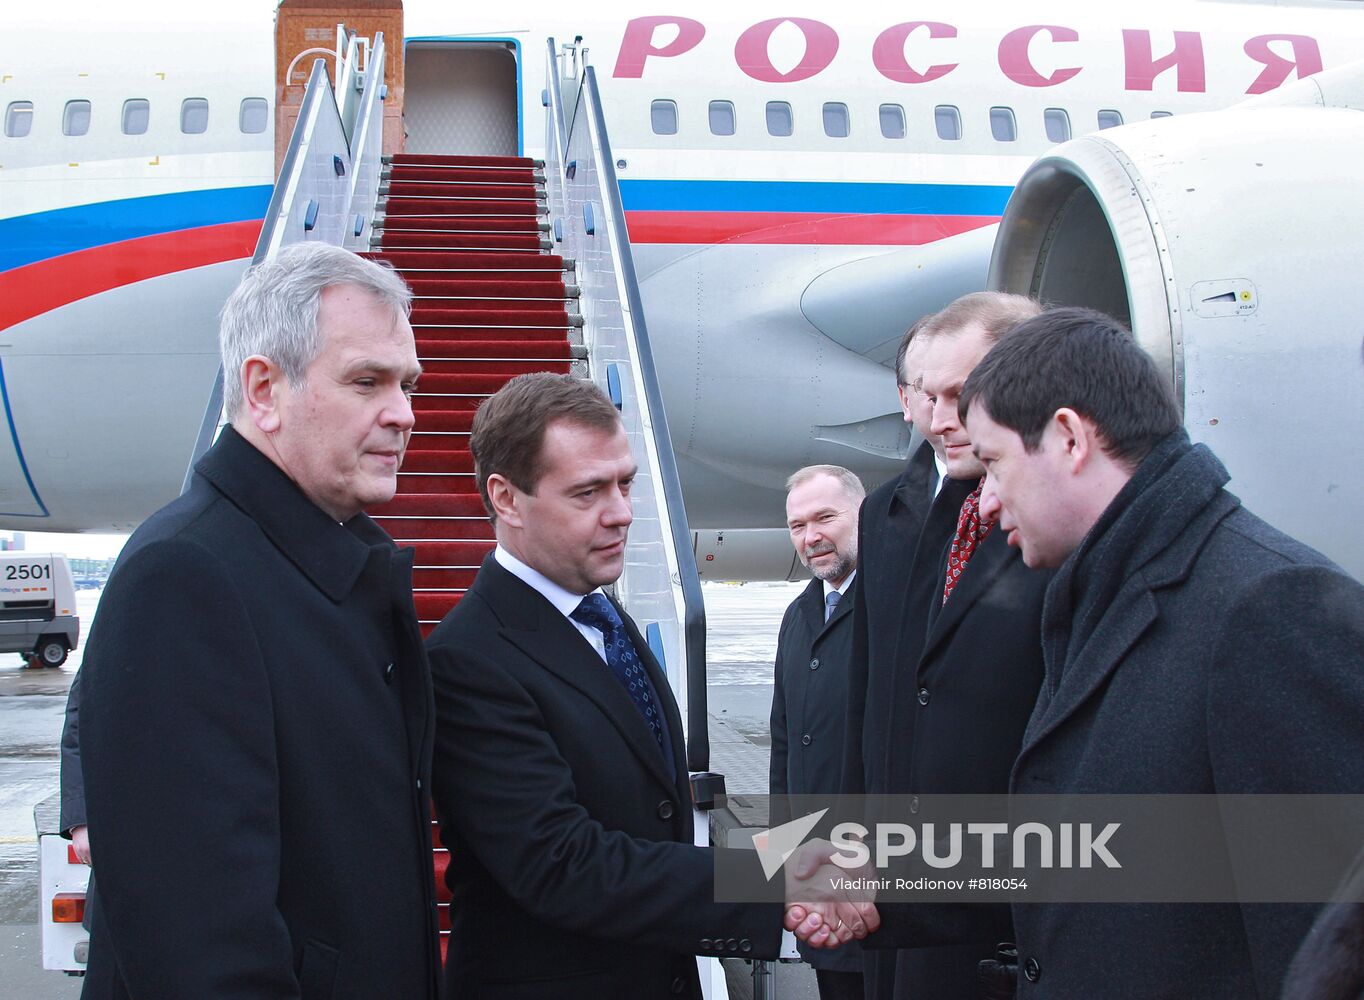 Dmitry Medvedev's official visit to Warsaw